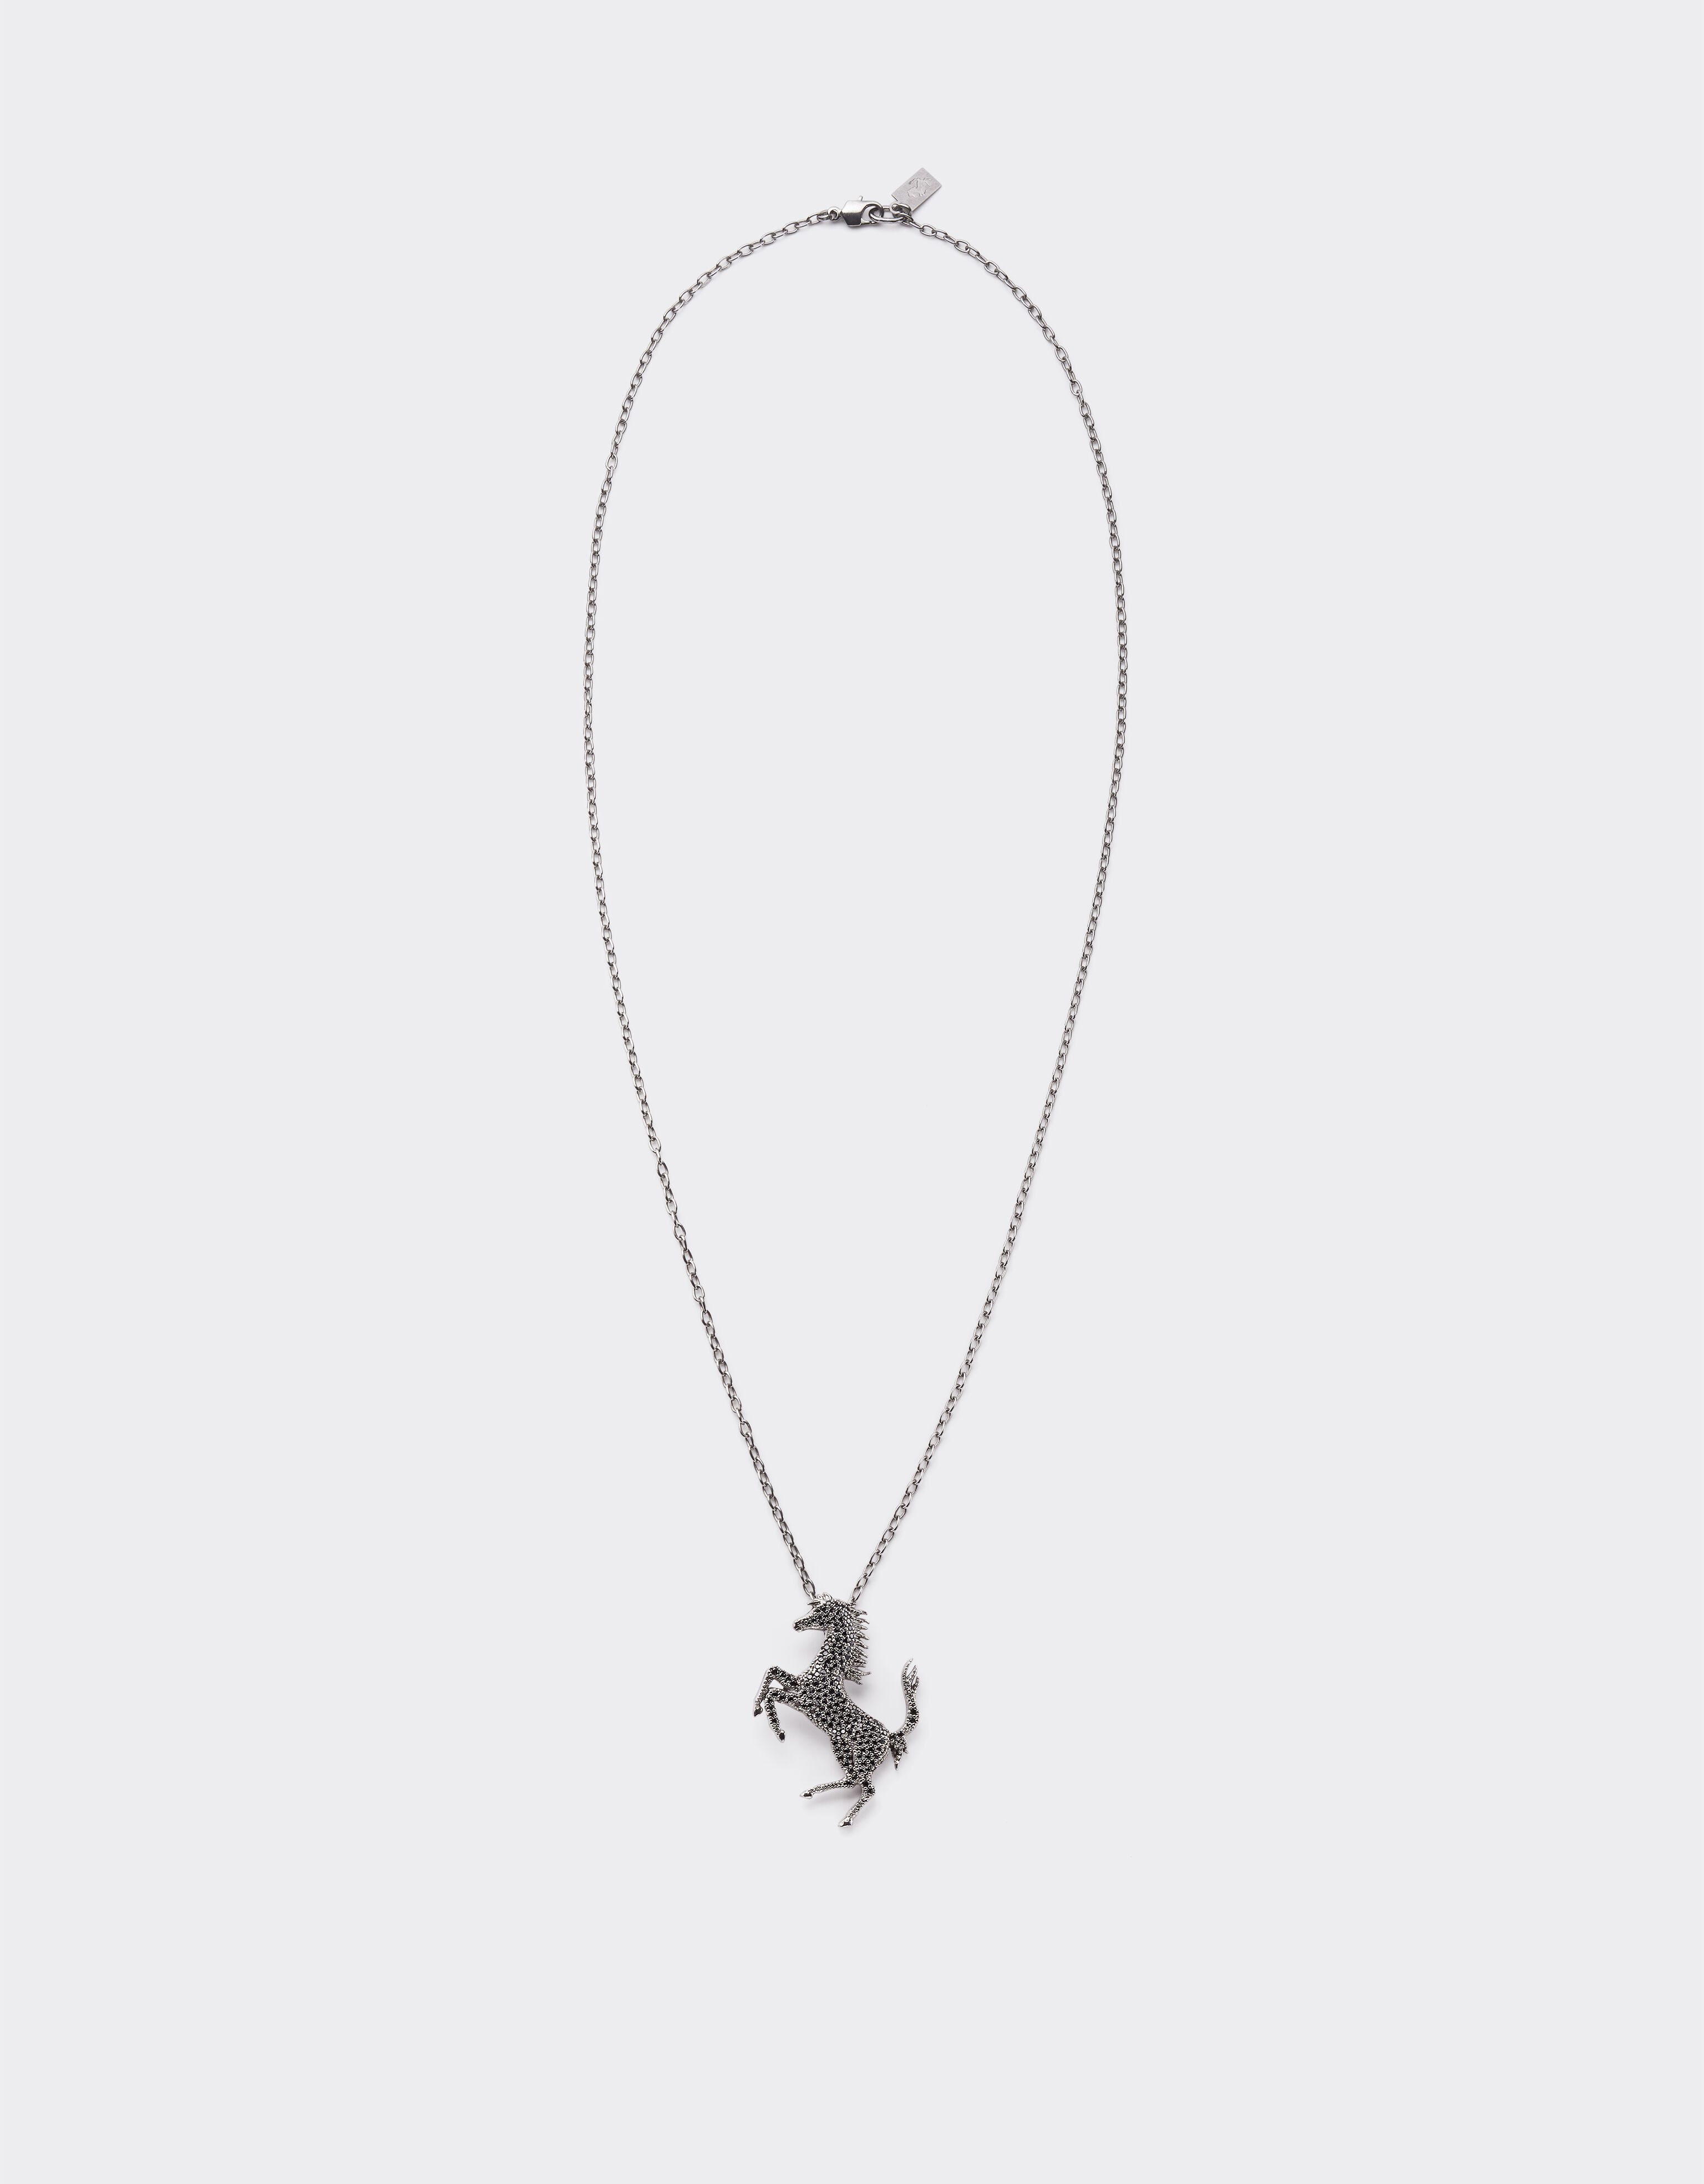 Ferrari Prancing Horse necklace with rhinestones 黑色 20211f